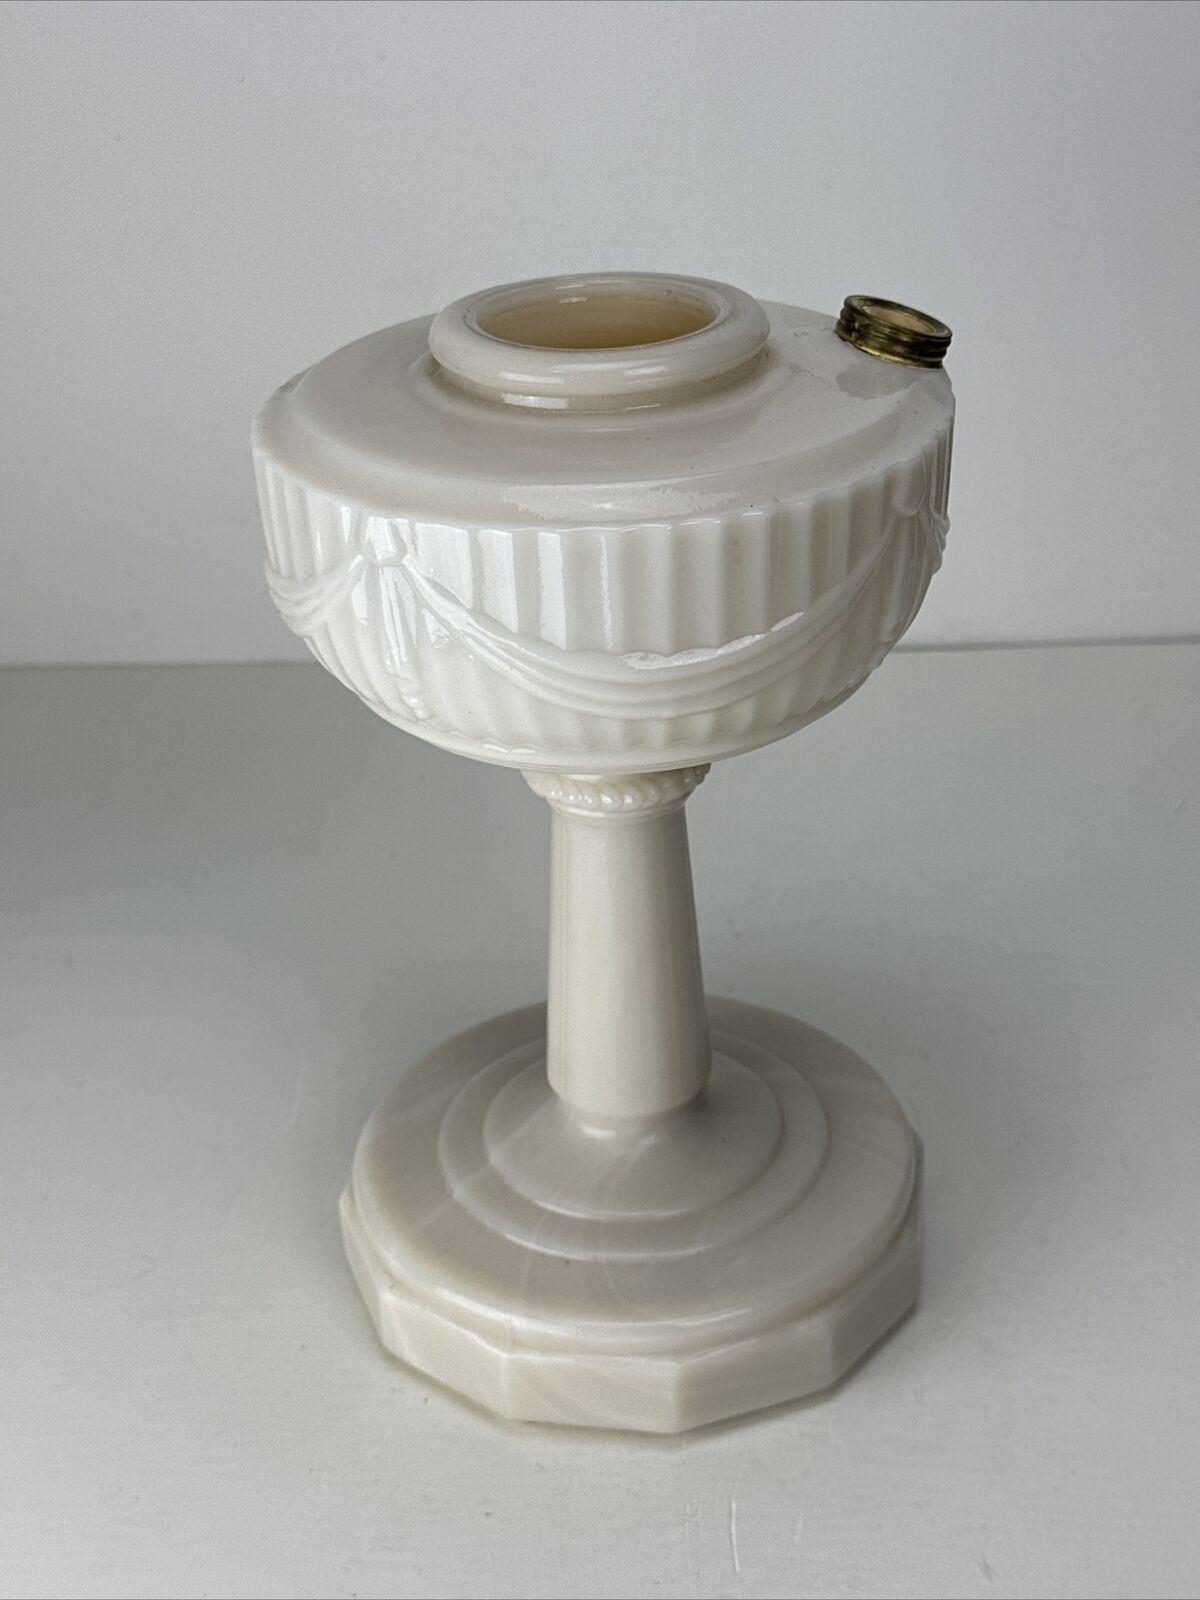 Antique Vintage Glass Aladdin Kerosene Oil Lamp Alacite Tall Lincoln Drape (1)